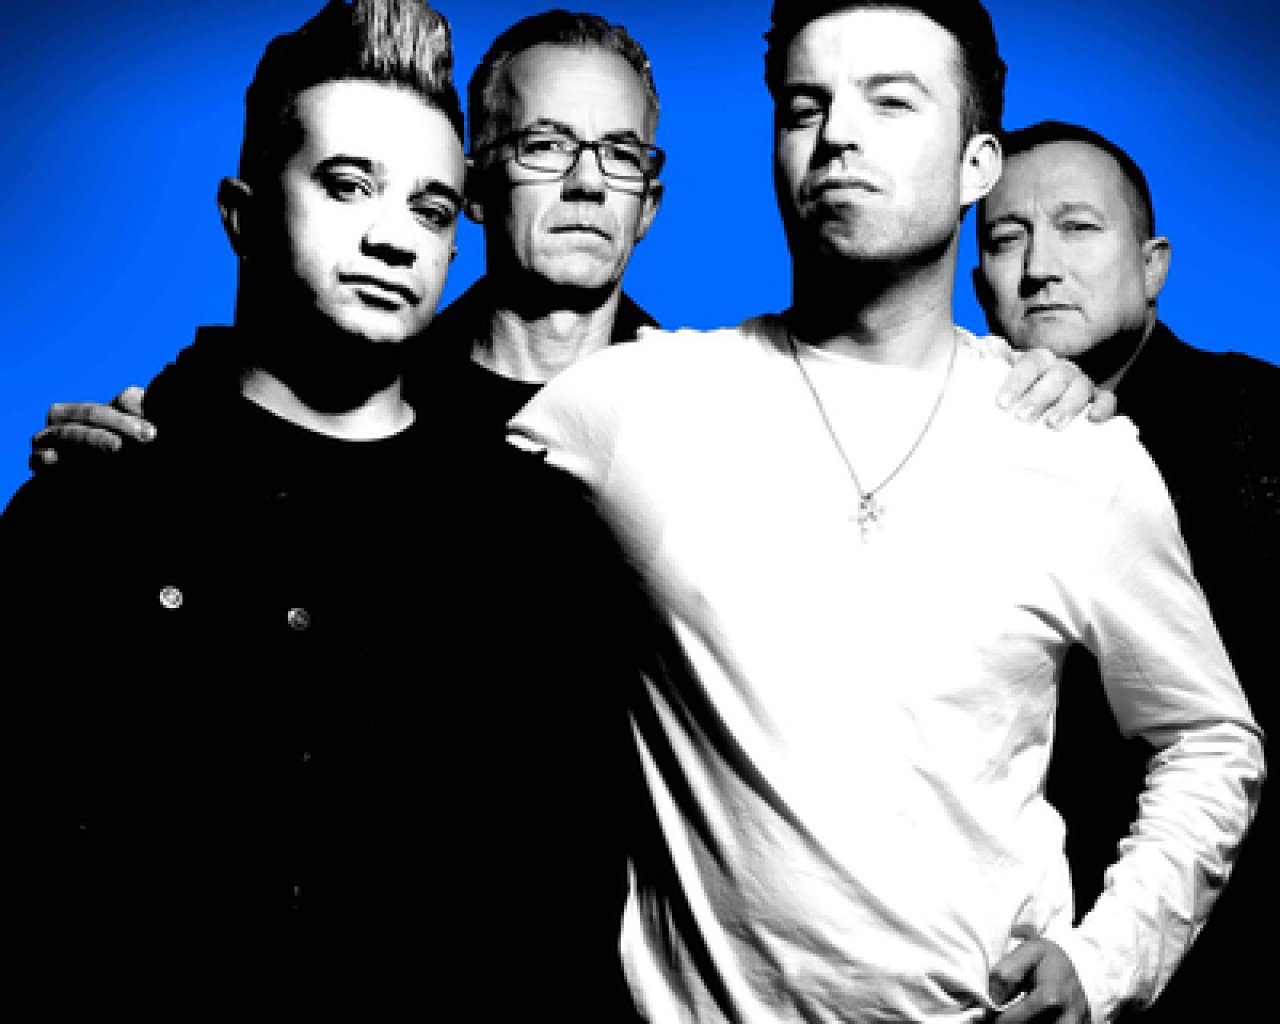 The Devout - Depeche Mode Tribute